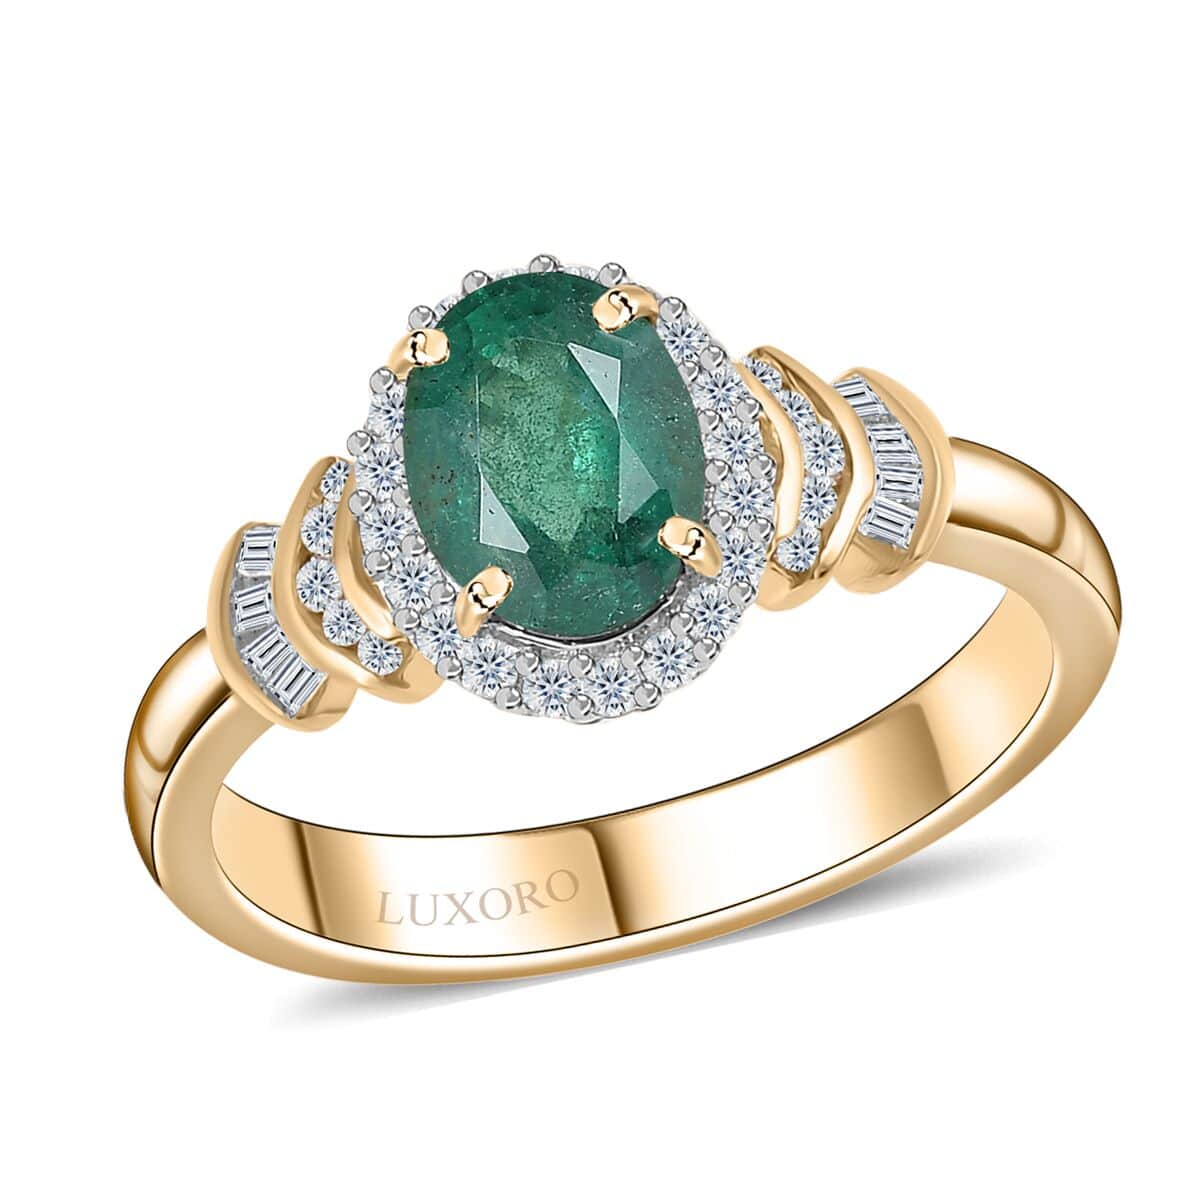 Luxoro 10K Yellow Gold Premium Kagem Zambian Emerald and G-H I2 Diamond Halo Ring (Size 7.0) 1.35 ctw image number 0